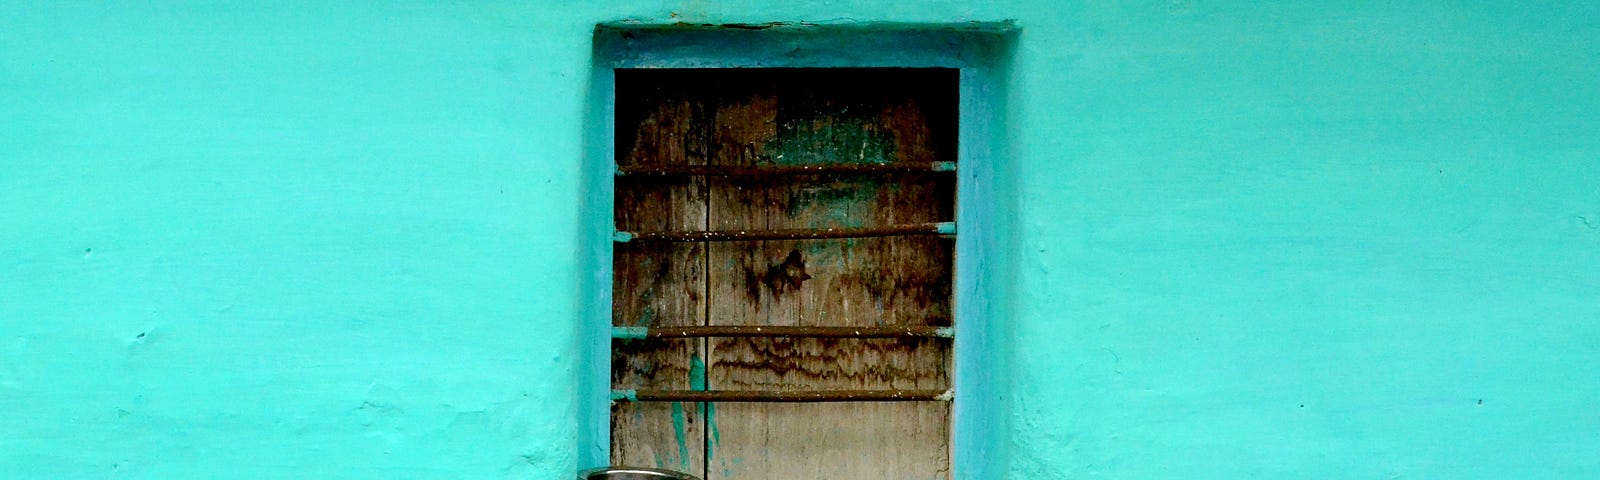 old wooden window in a light blue wall